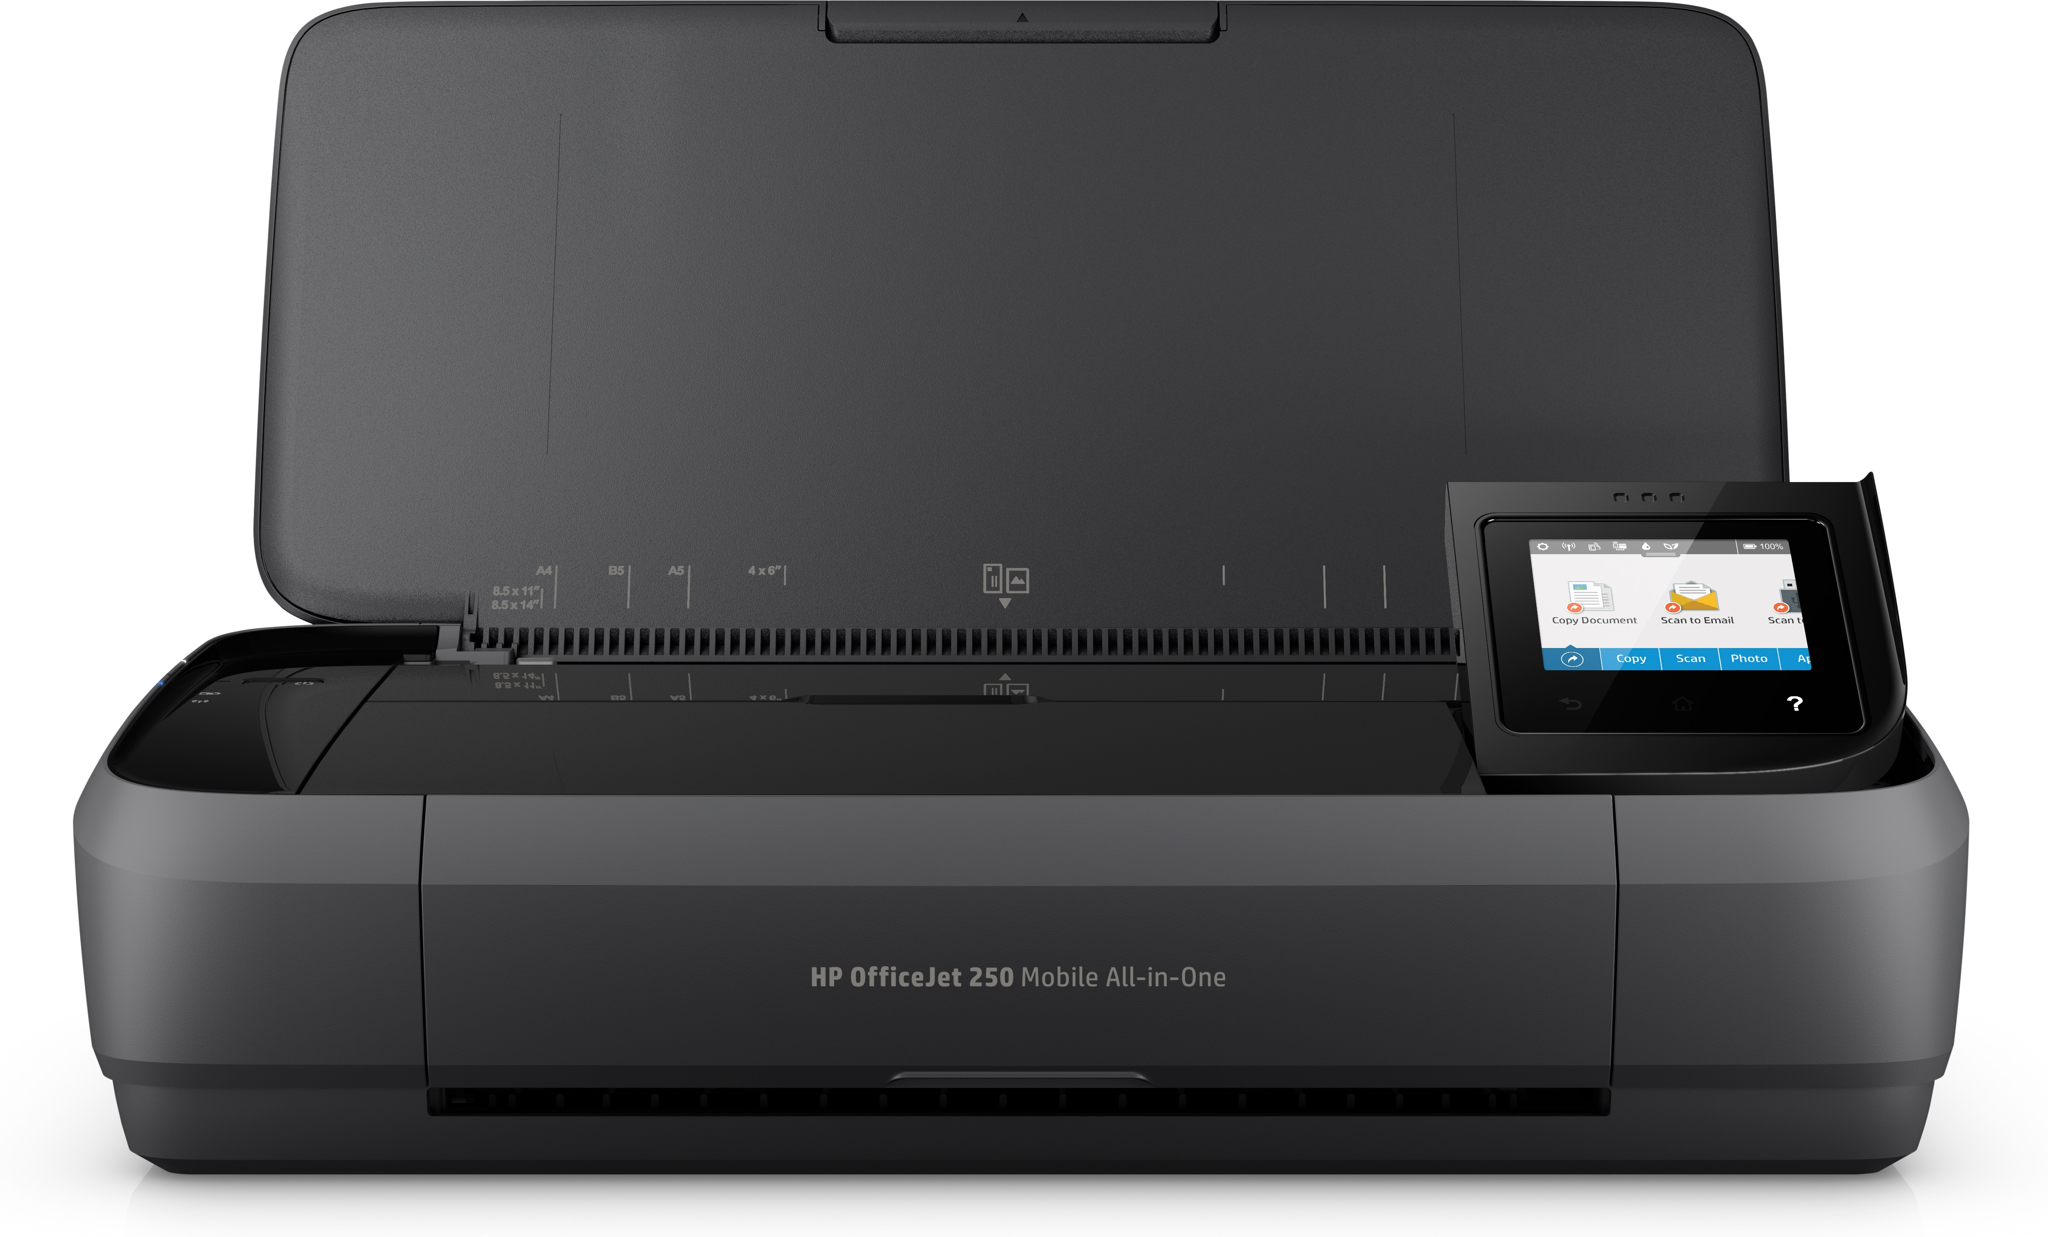 Bild von HP OfficeJet 250 Mobile All-in-One Tintenstrahldruck Multifunktionsgerät - Farbig - 7 ppm - USB 2.0